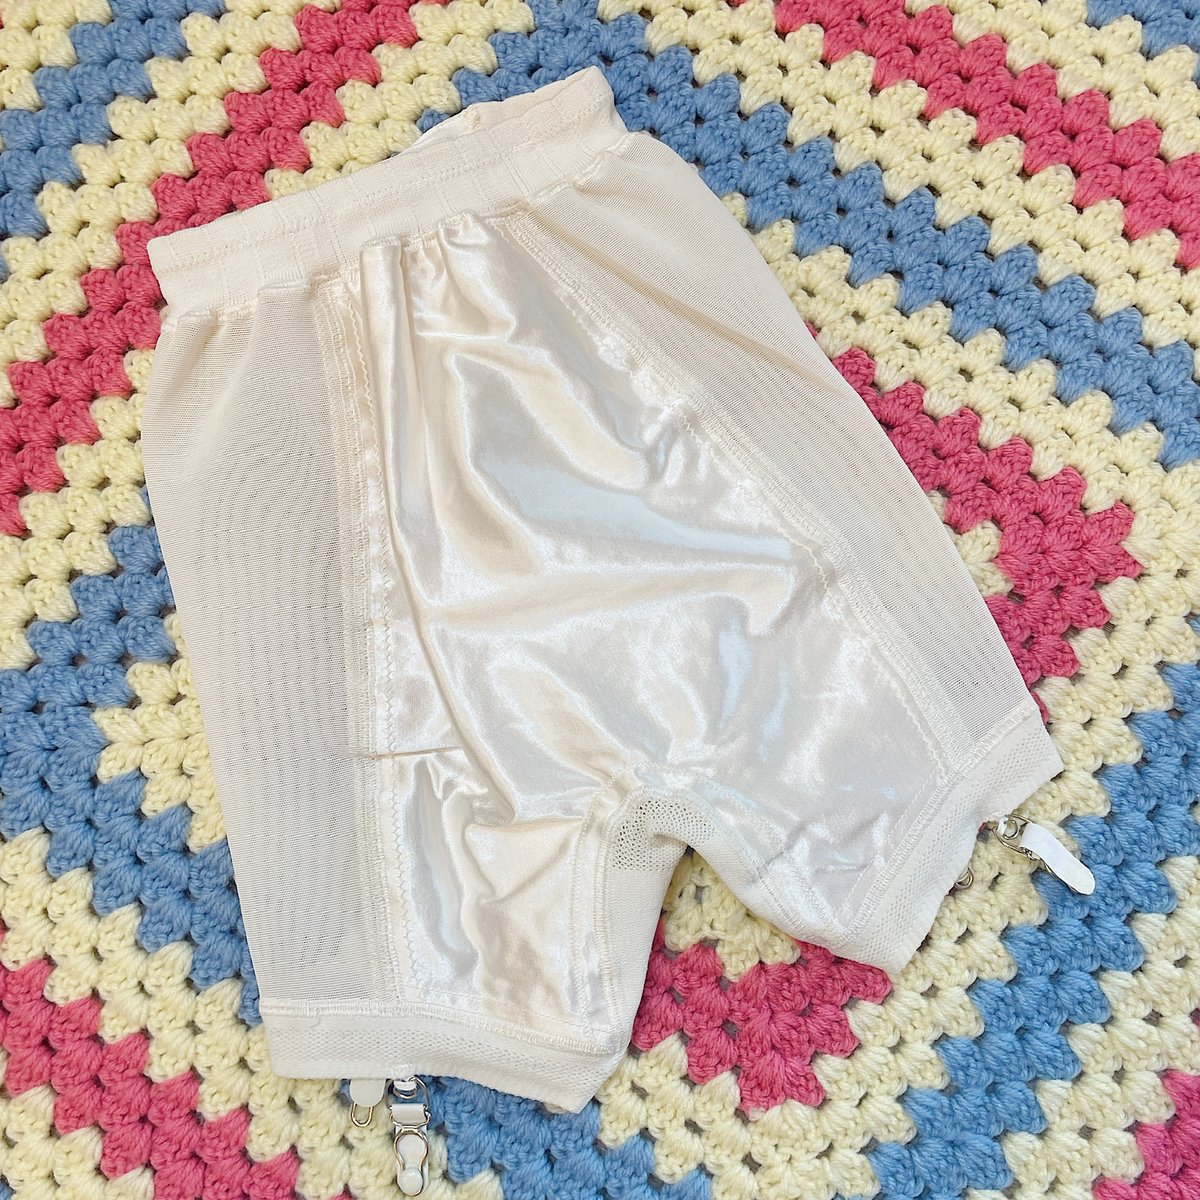 Size S - Vassarette Shapewear White Lace and Satin Shorts with Garters